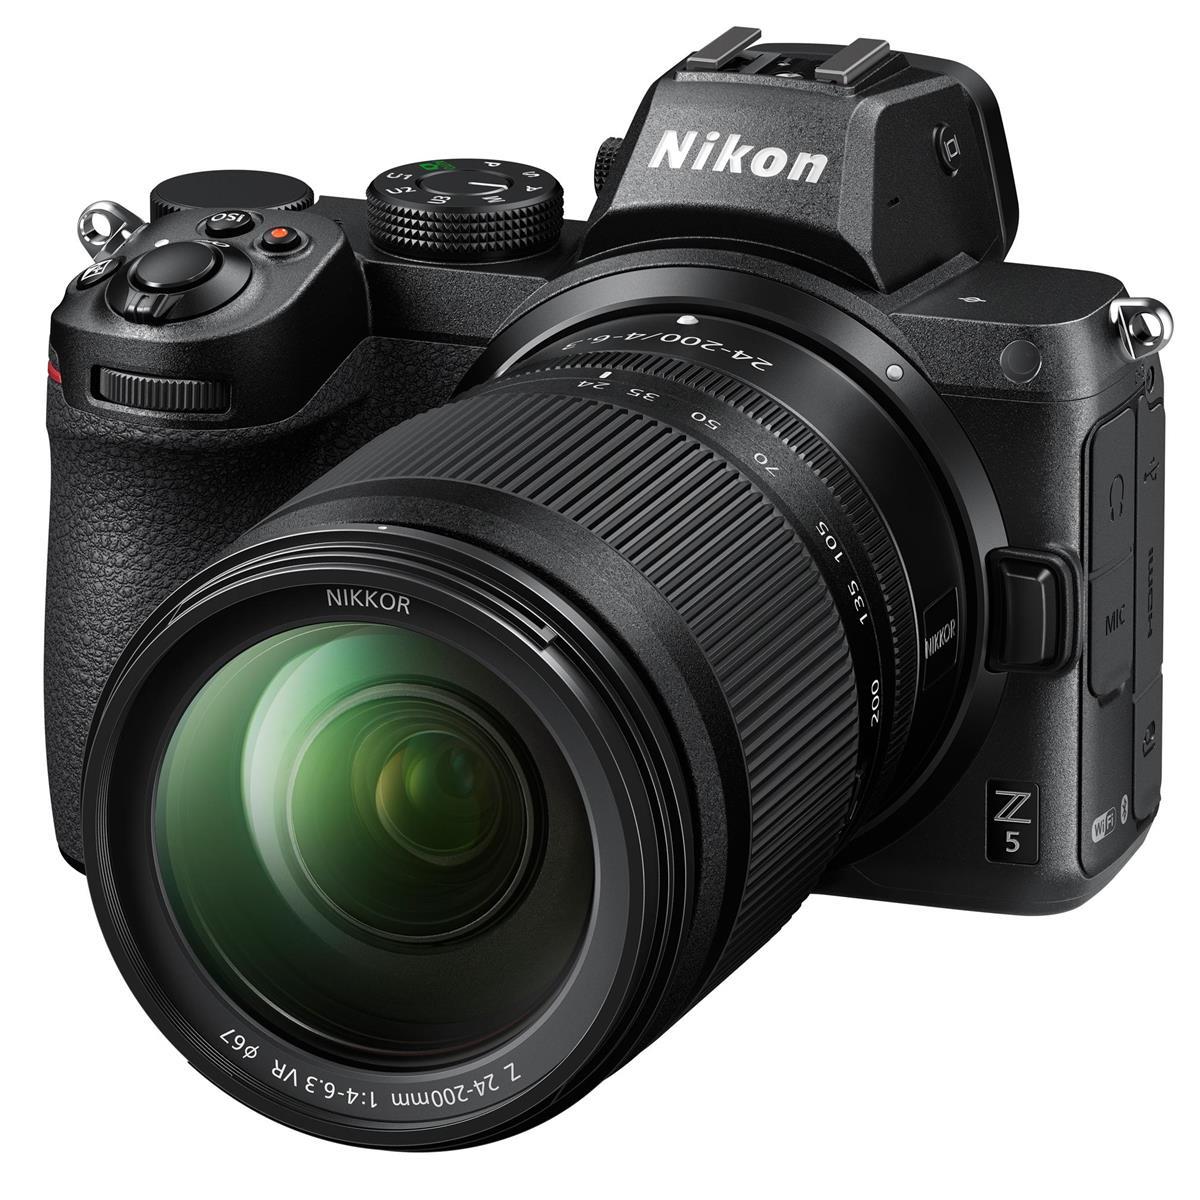 Nikon Z5 Full Frame Mirrorless Camera with NIKKOR Z 24-200mm f/4-6.3 VR Lens